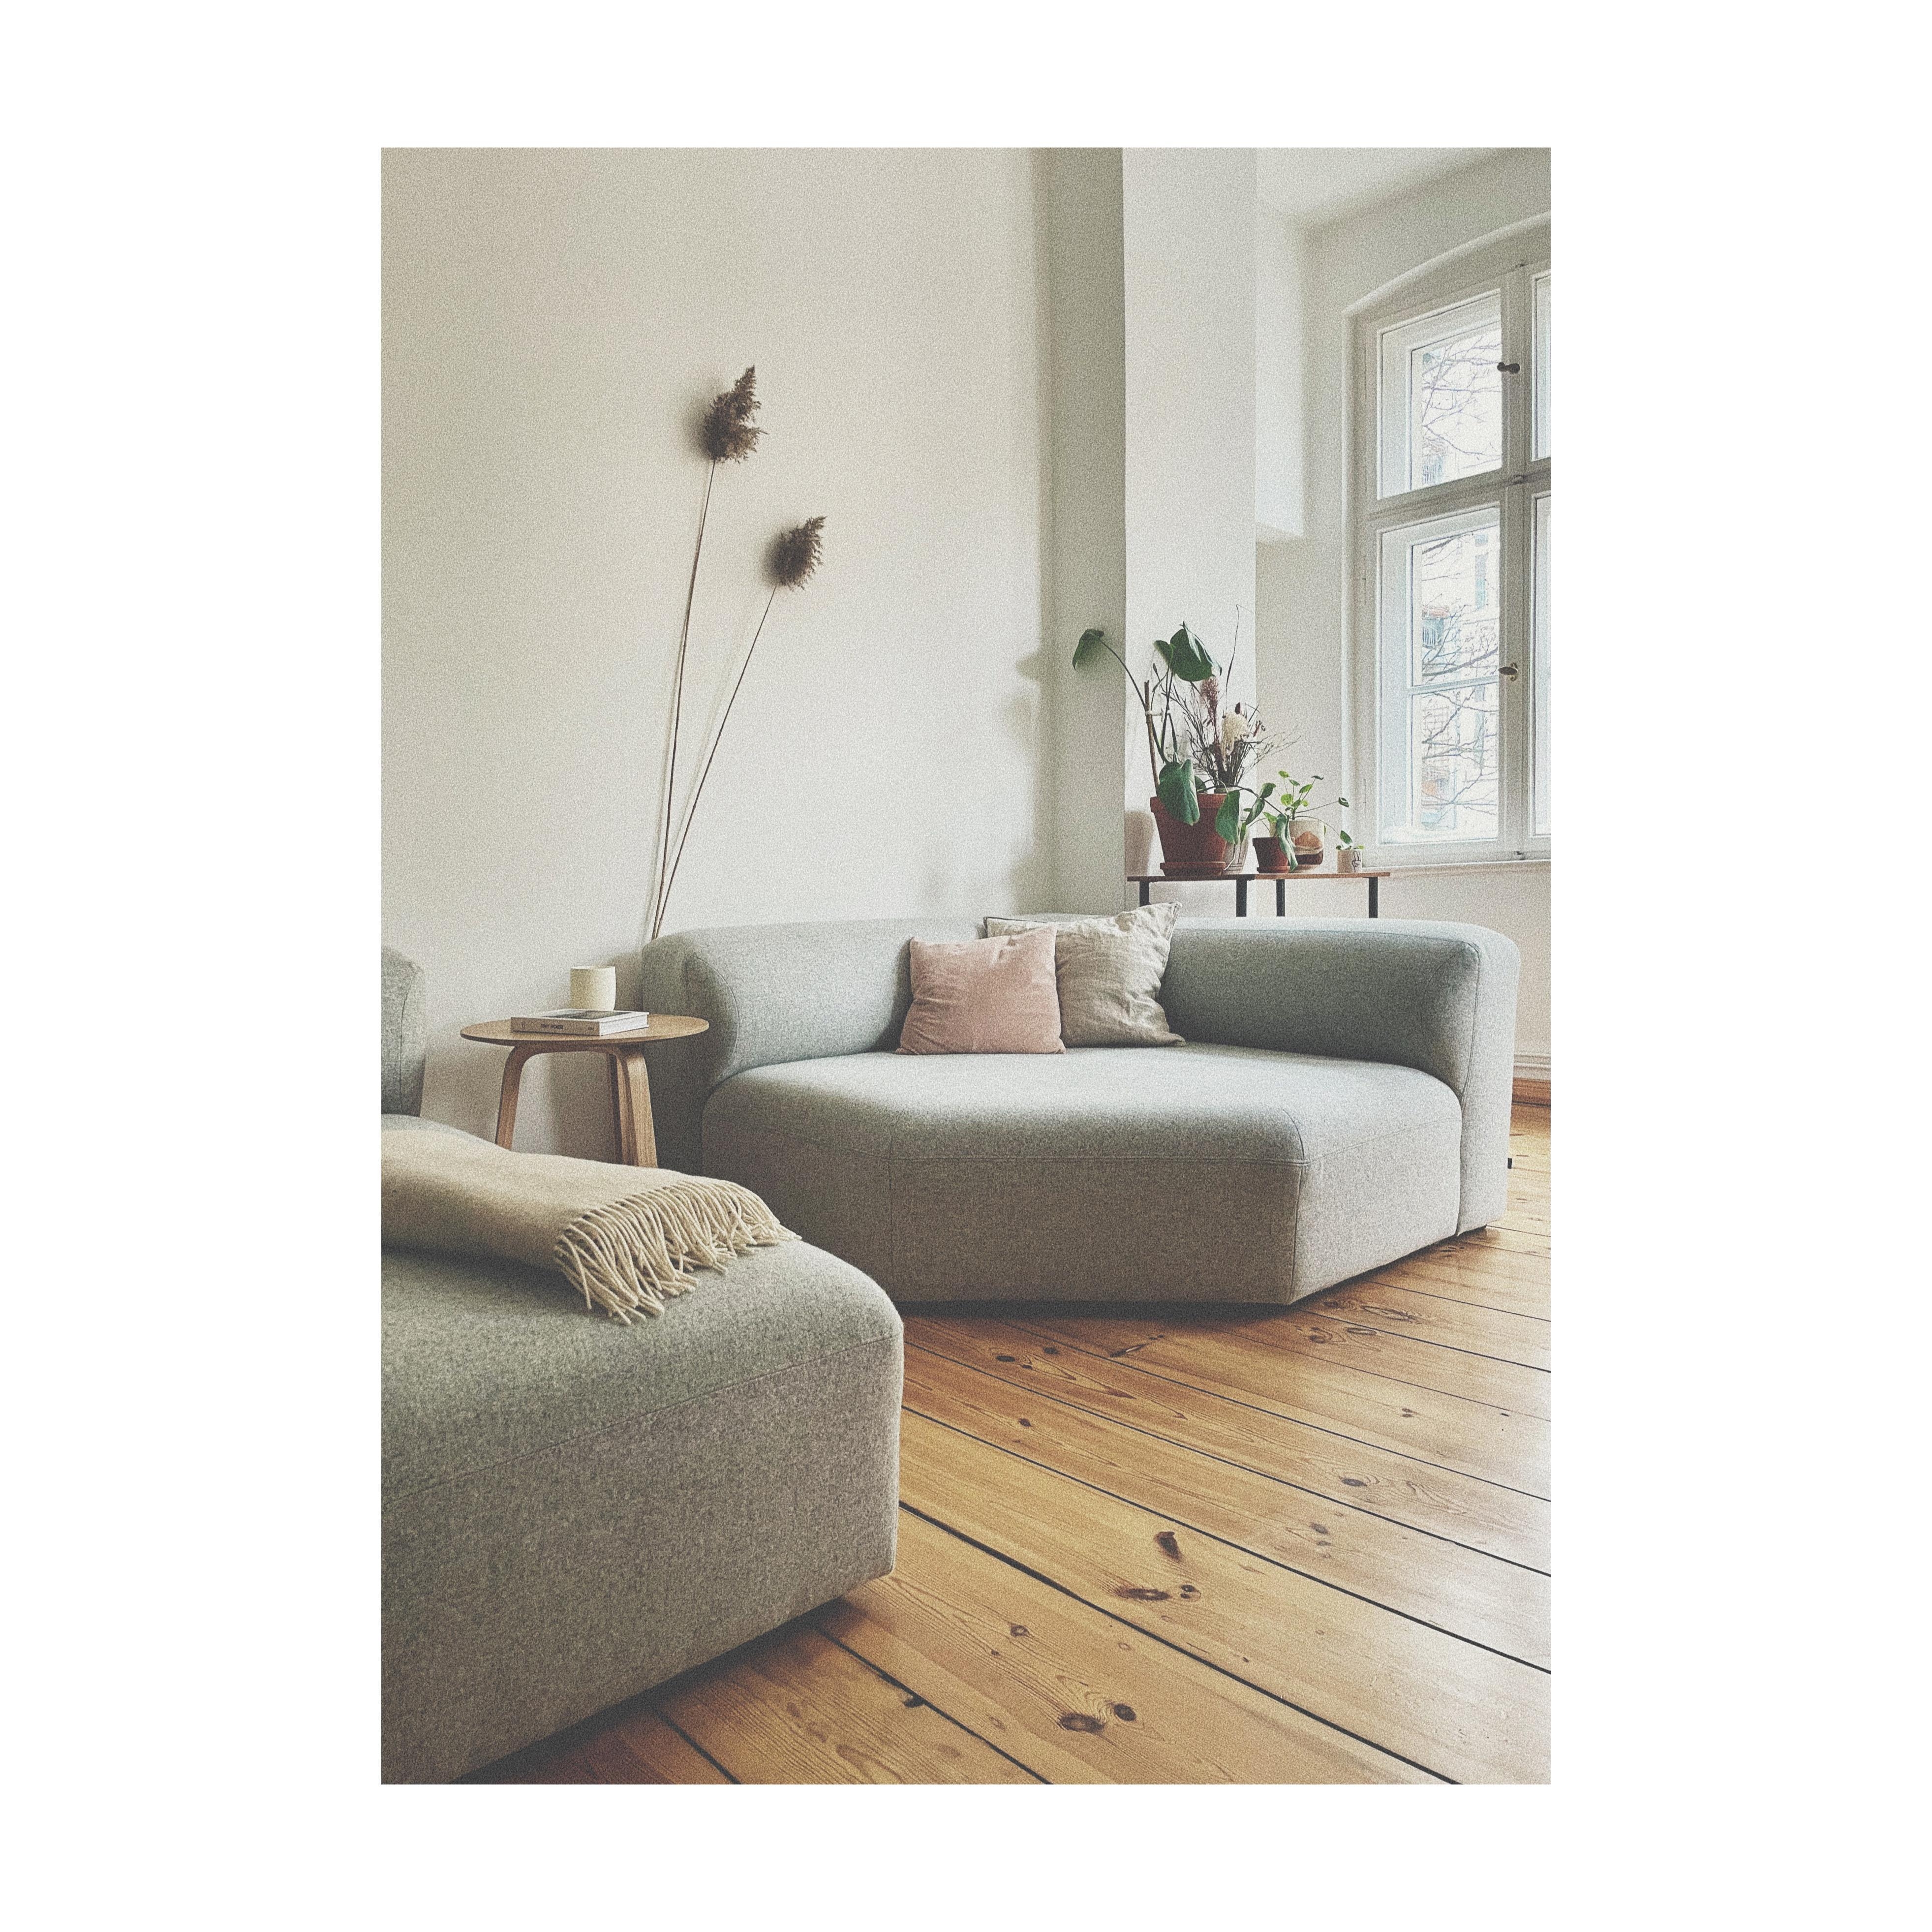 lieblingsplatz

#couch #modulsofa #bolia #cozyhome #tinyliving #42qm #berlin #altbau #interior